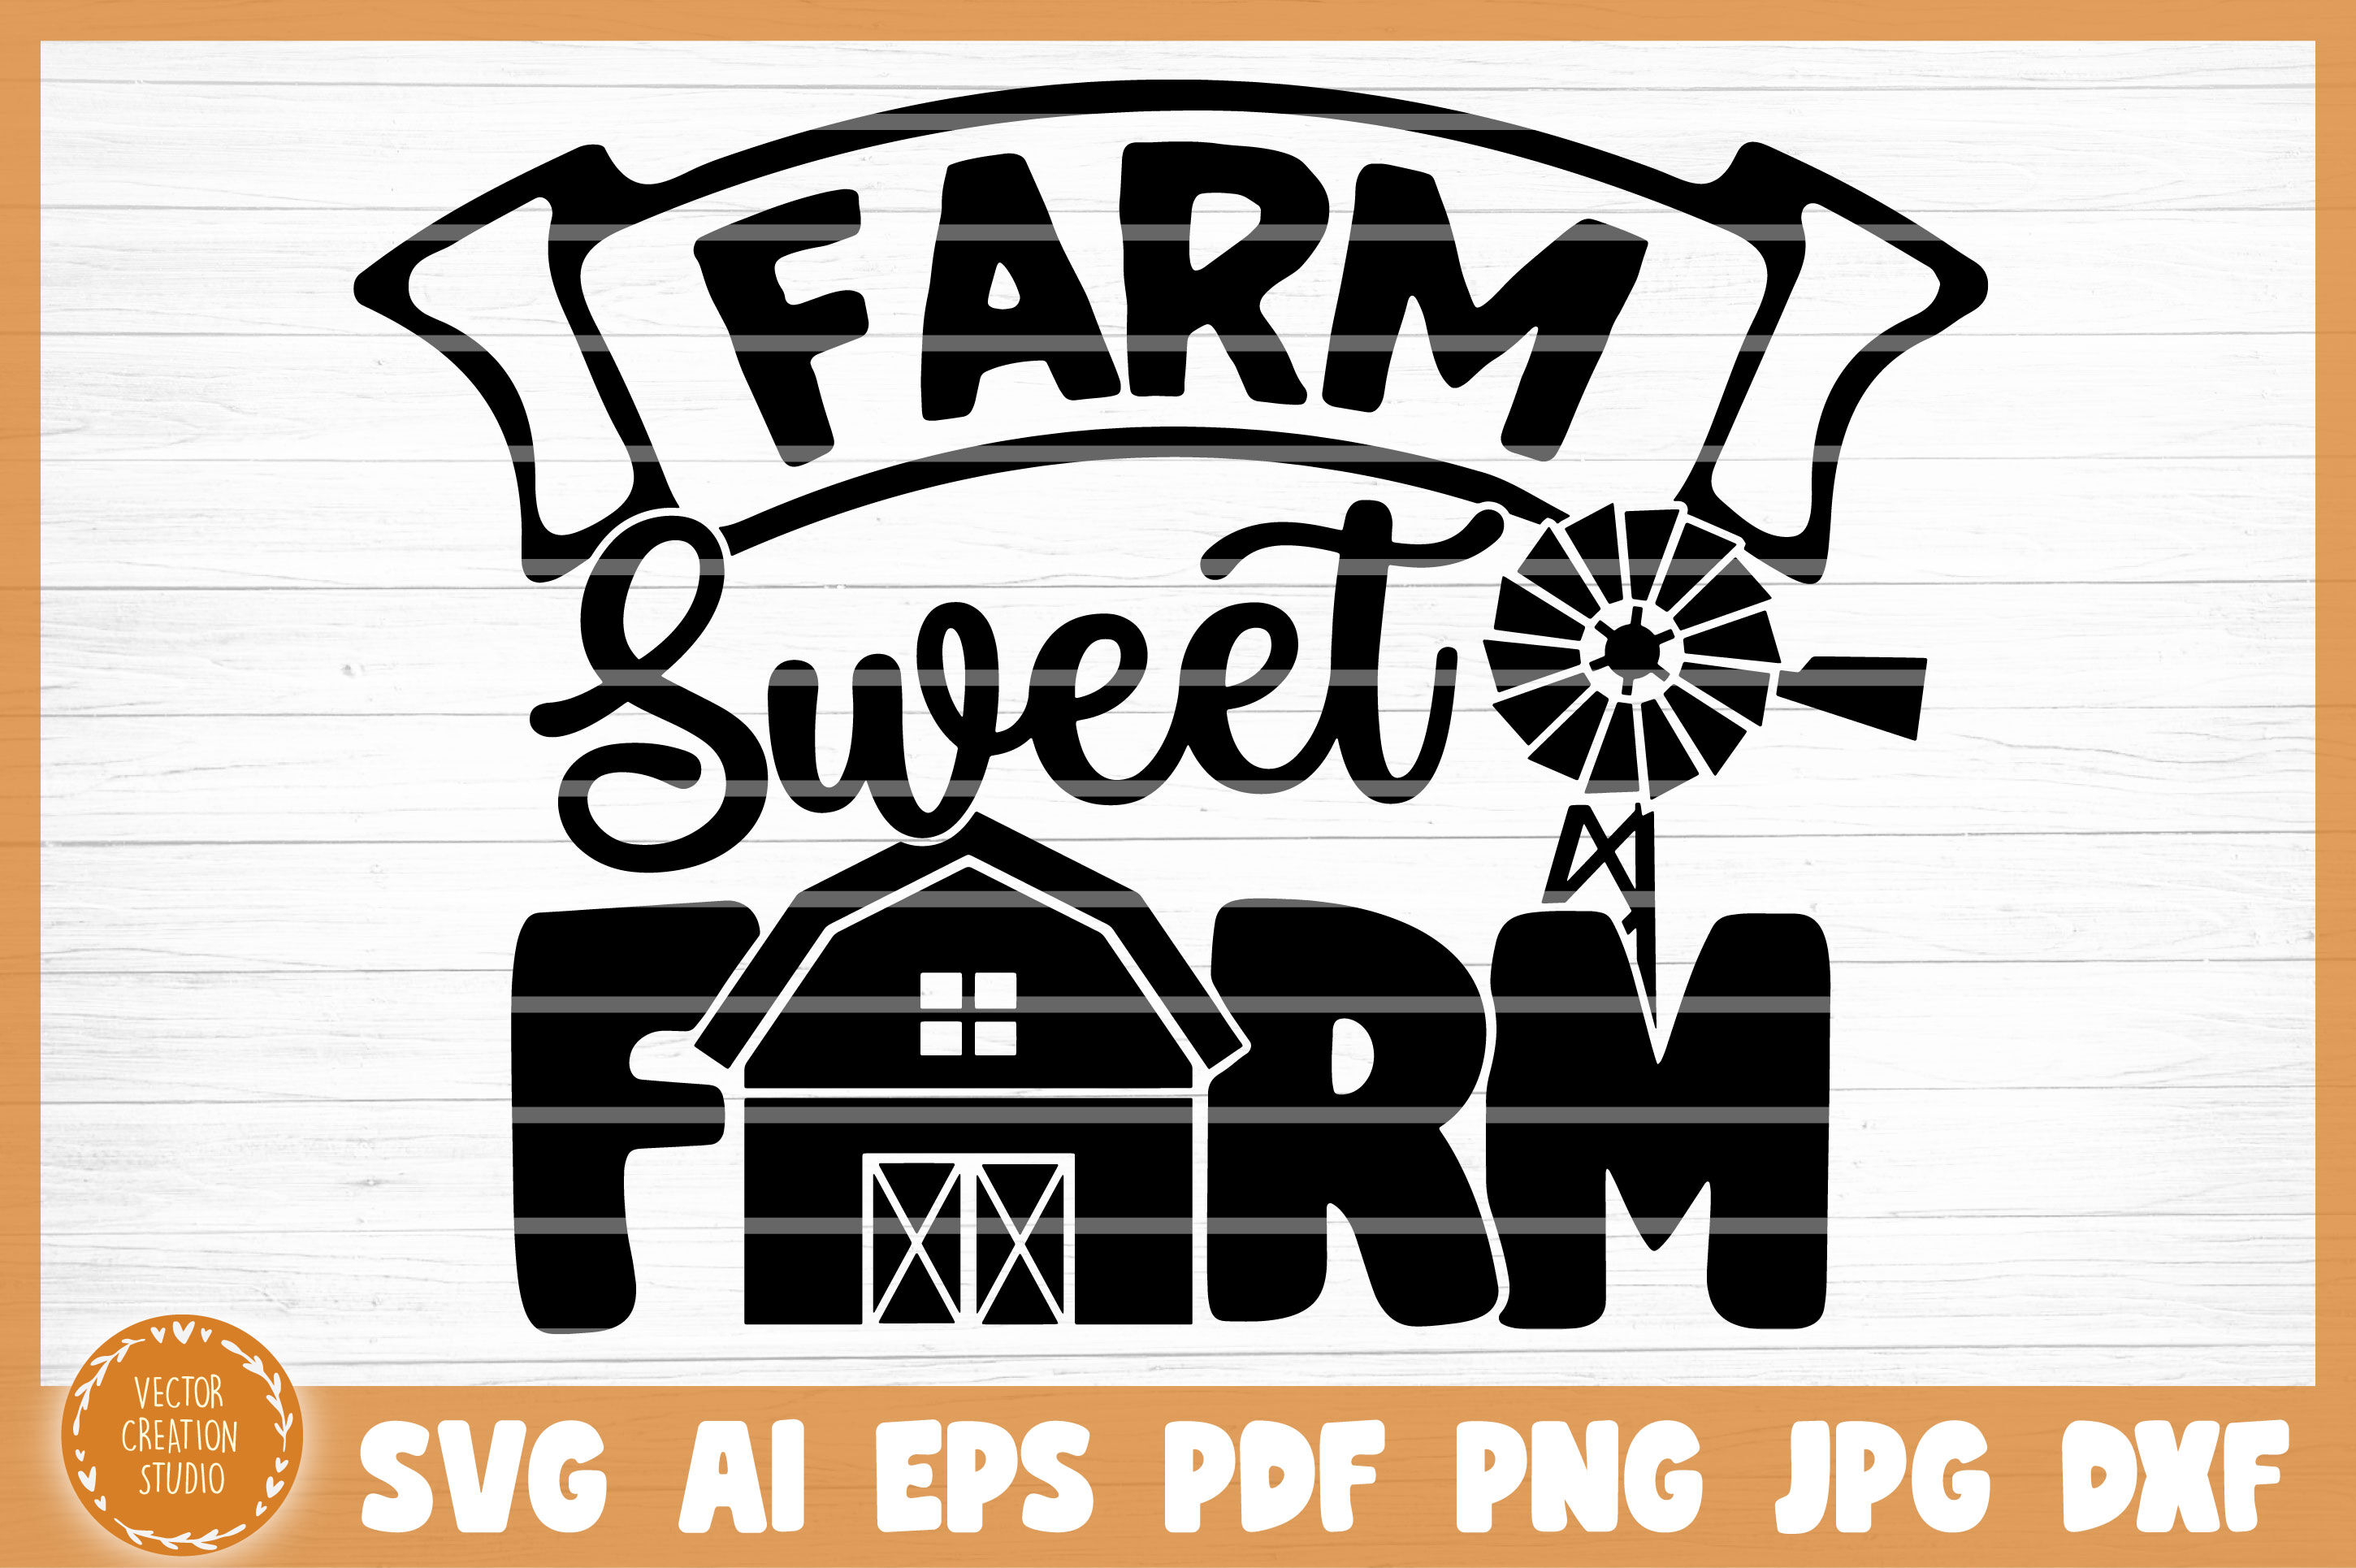 Free Free 77 Farm Sweet Farm Svg Free SVG PNG EPS DXF File